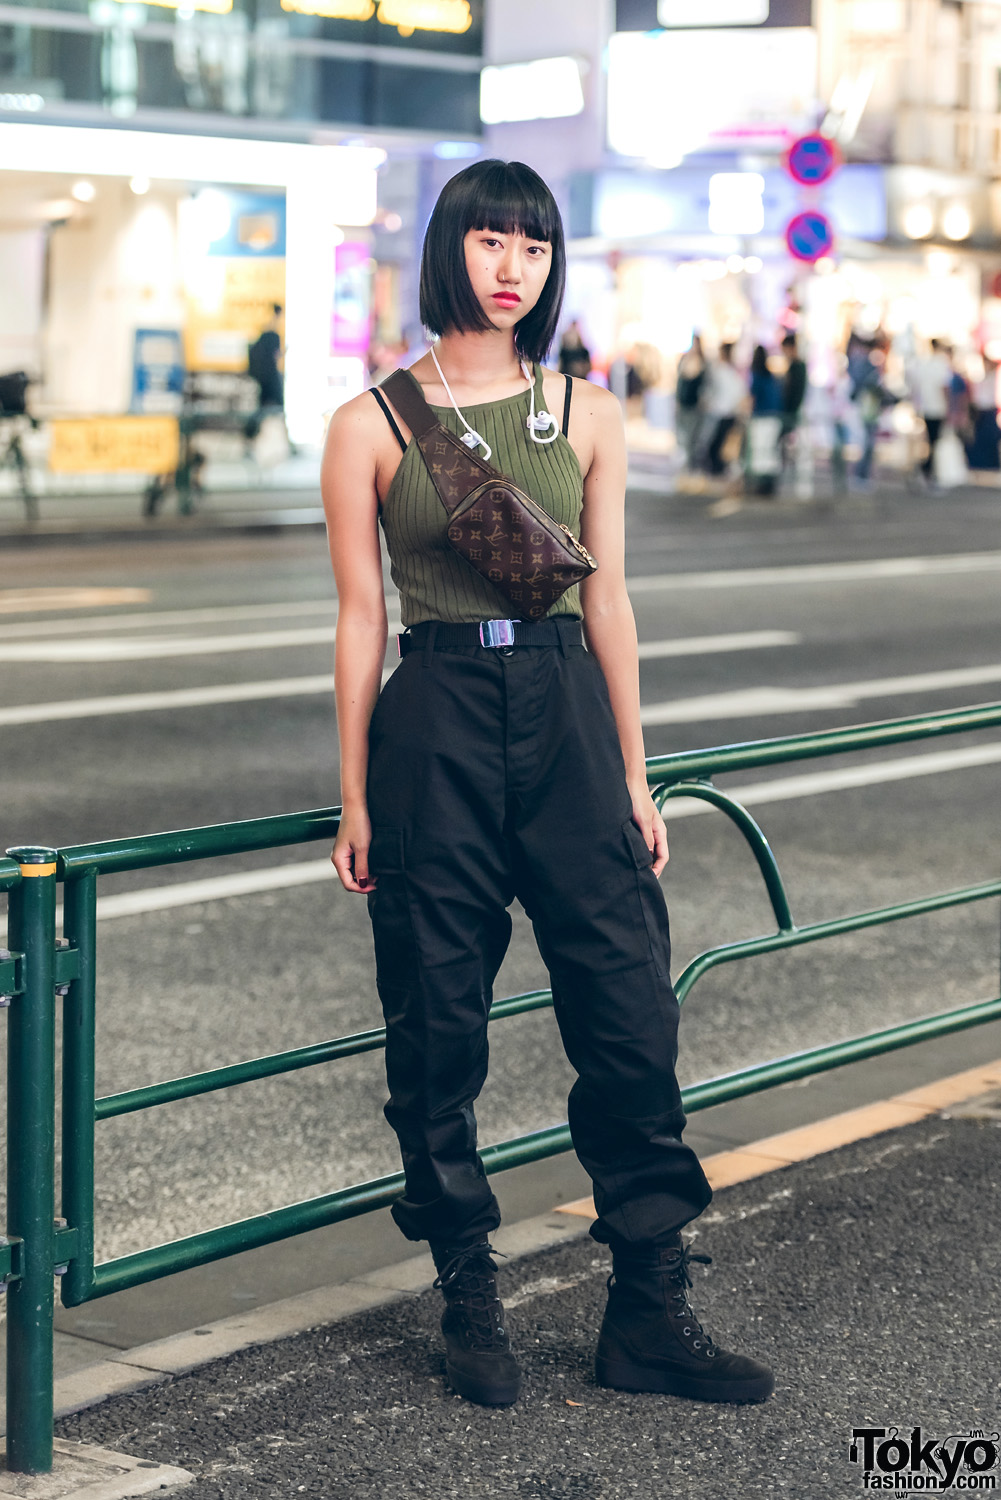 Harajuku Girl in Military Inspired Street Fashion w/ H&M, Rothco, Yeezy Boost Season 3 & Louis Vuitton